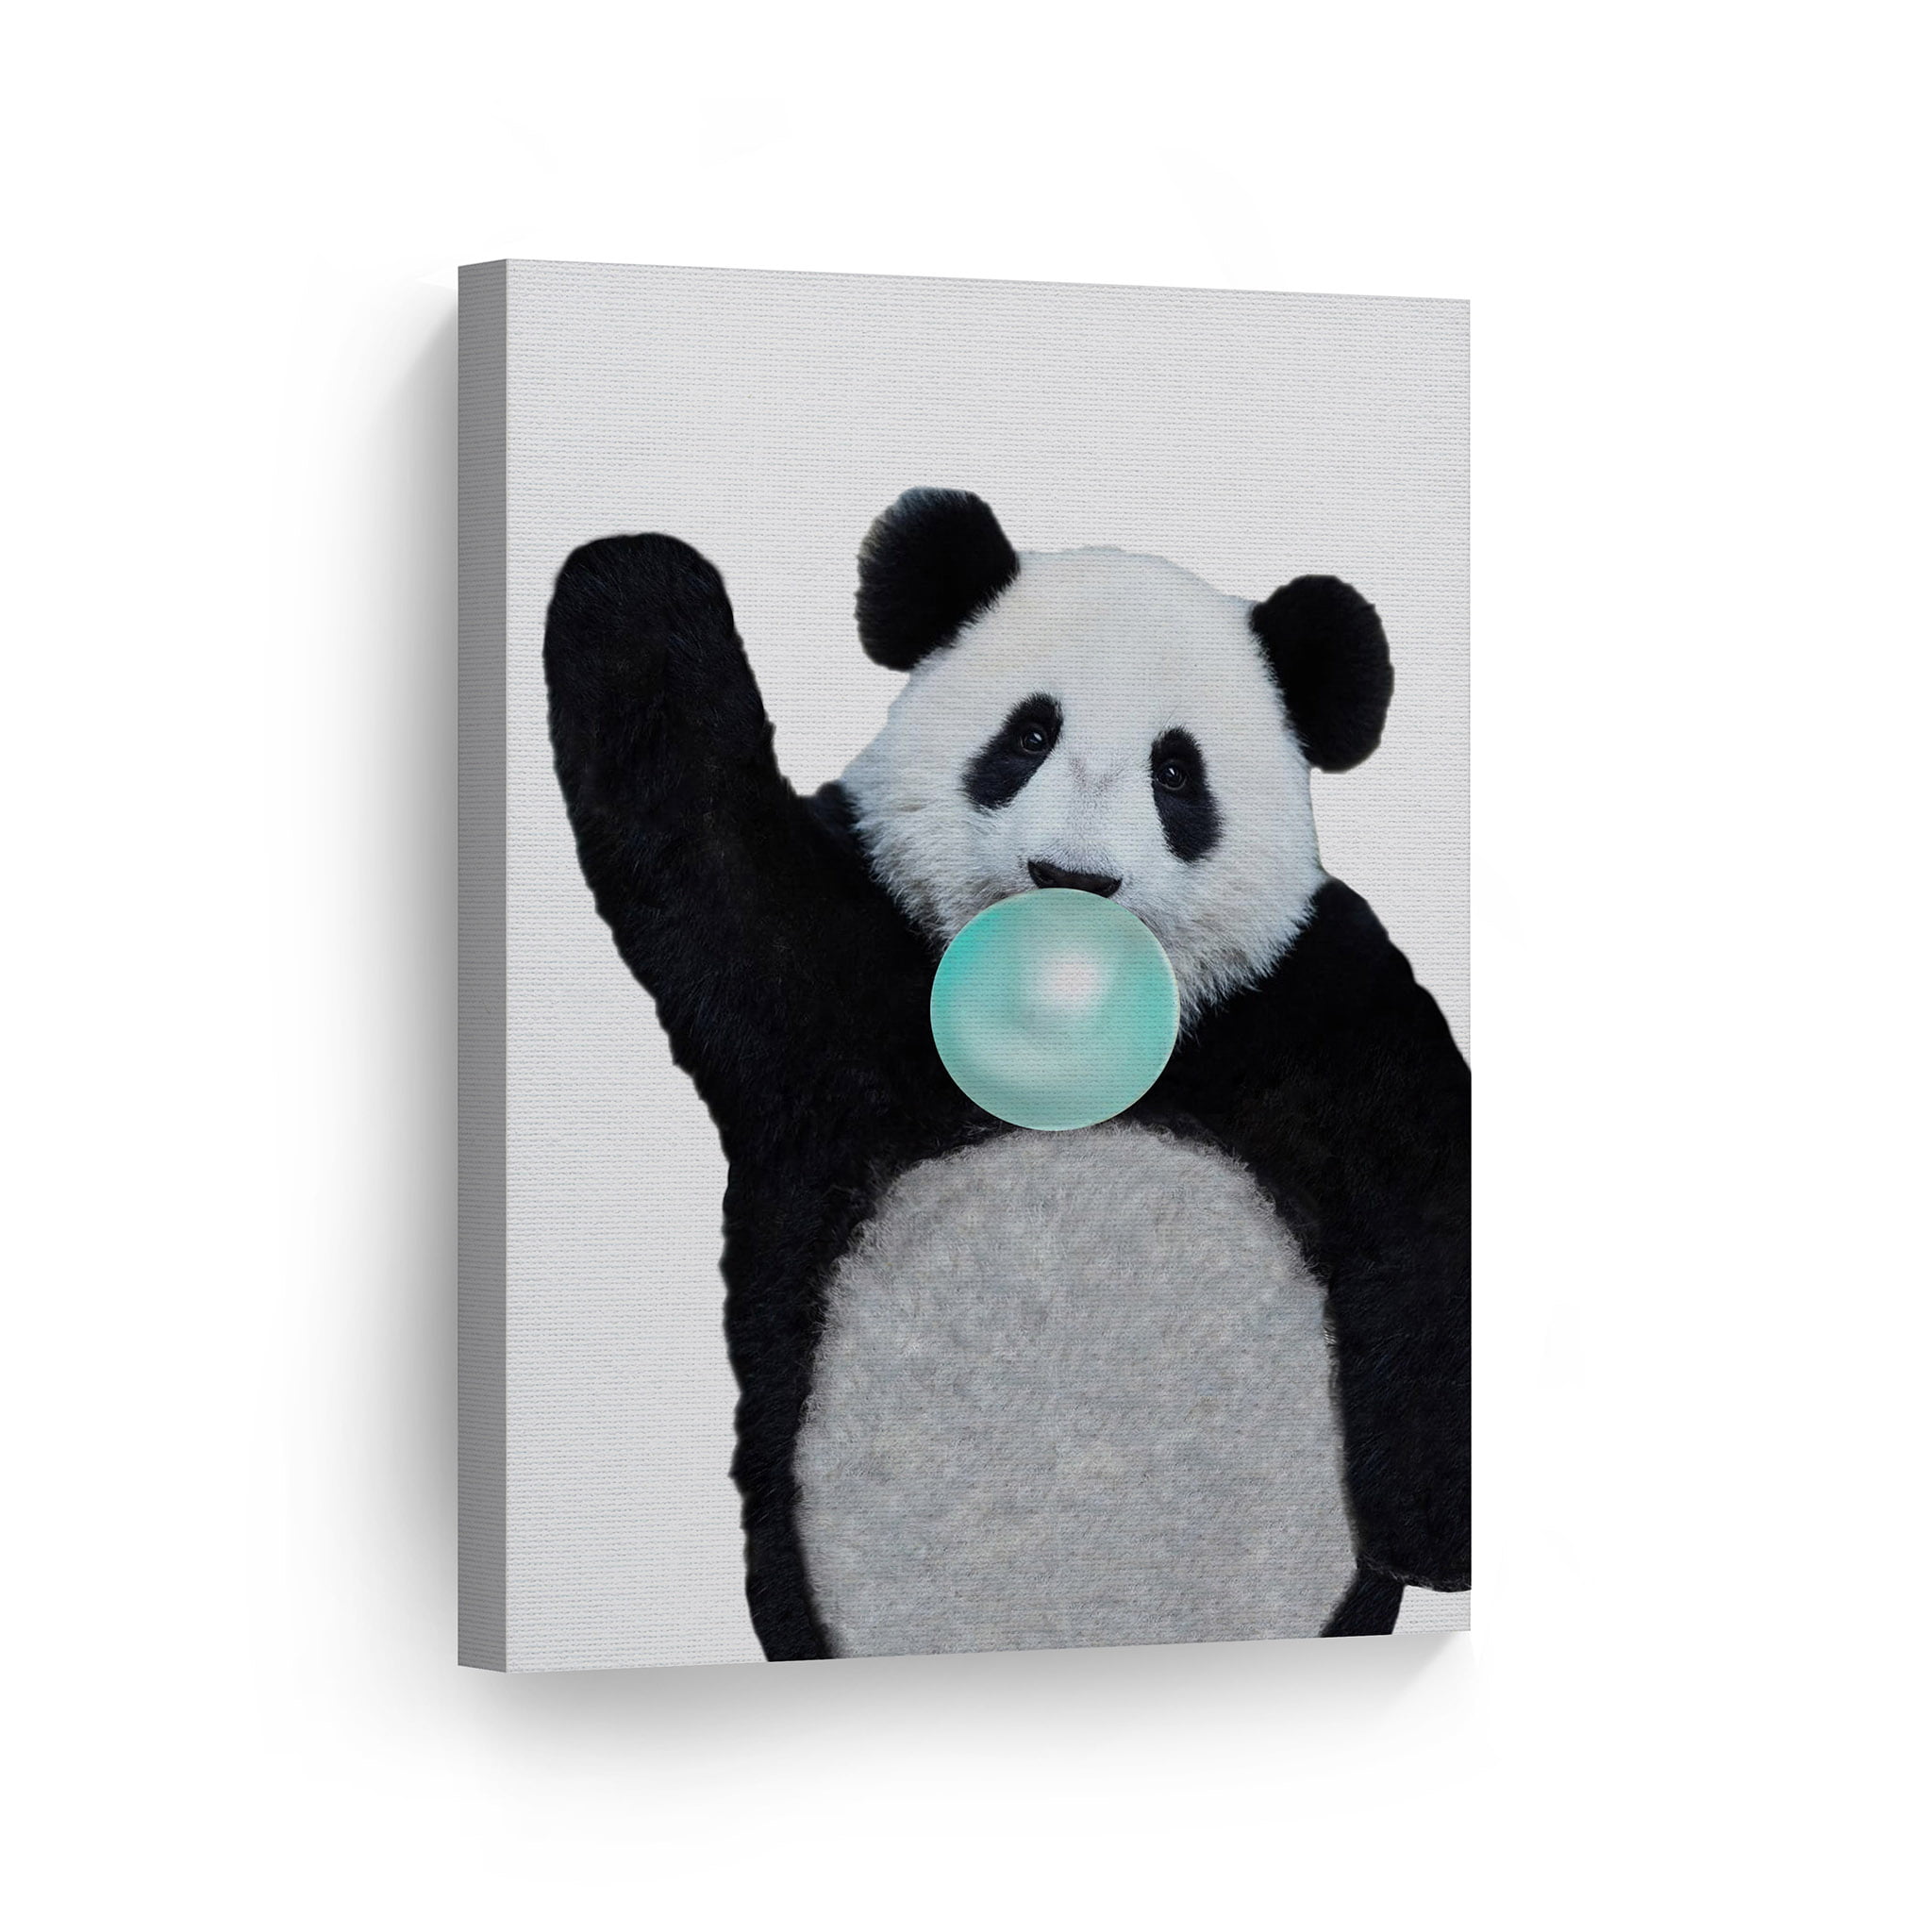 Smile Art Design Cute Panda Animal Bubble Gum Art Teal Blue Chewing Gum  CANVAS PRINT Black and White Wall Art Home Pop Art Living Room Kids Room  Decor Nursery Ready to Hang